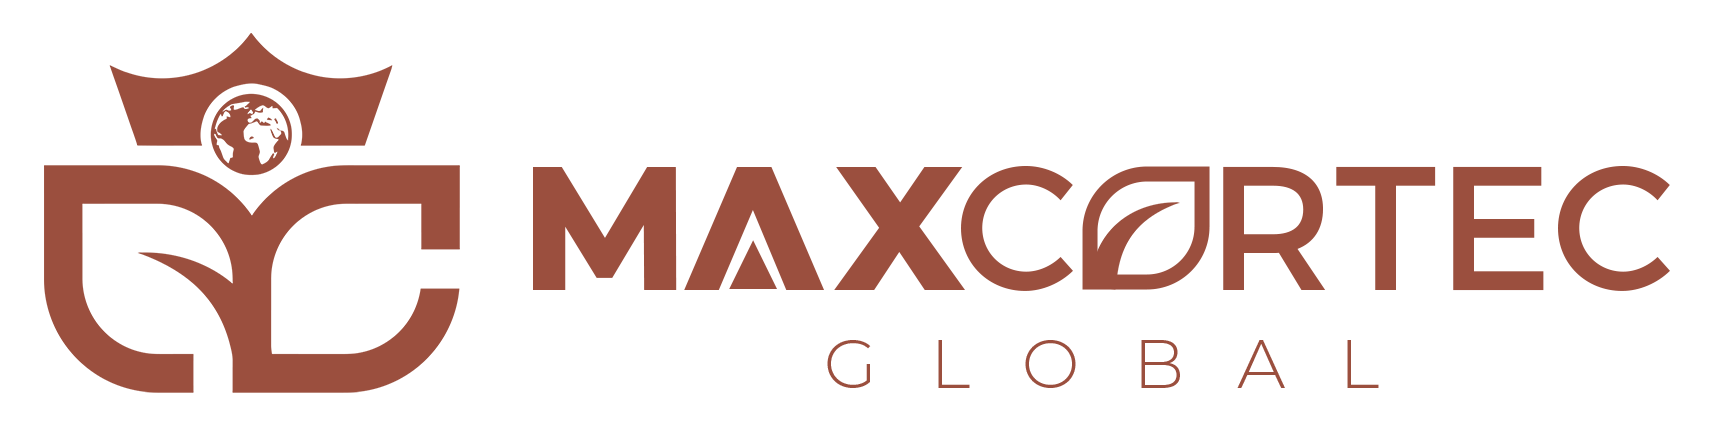 Maxcortec Hoizontal Logo Full one color b copy